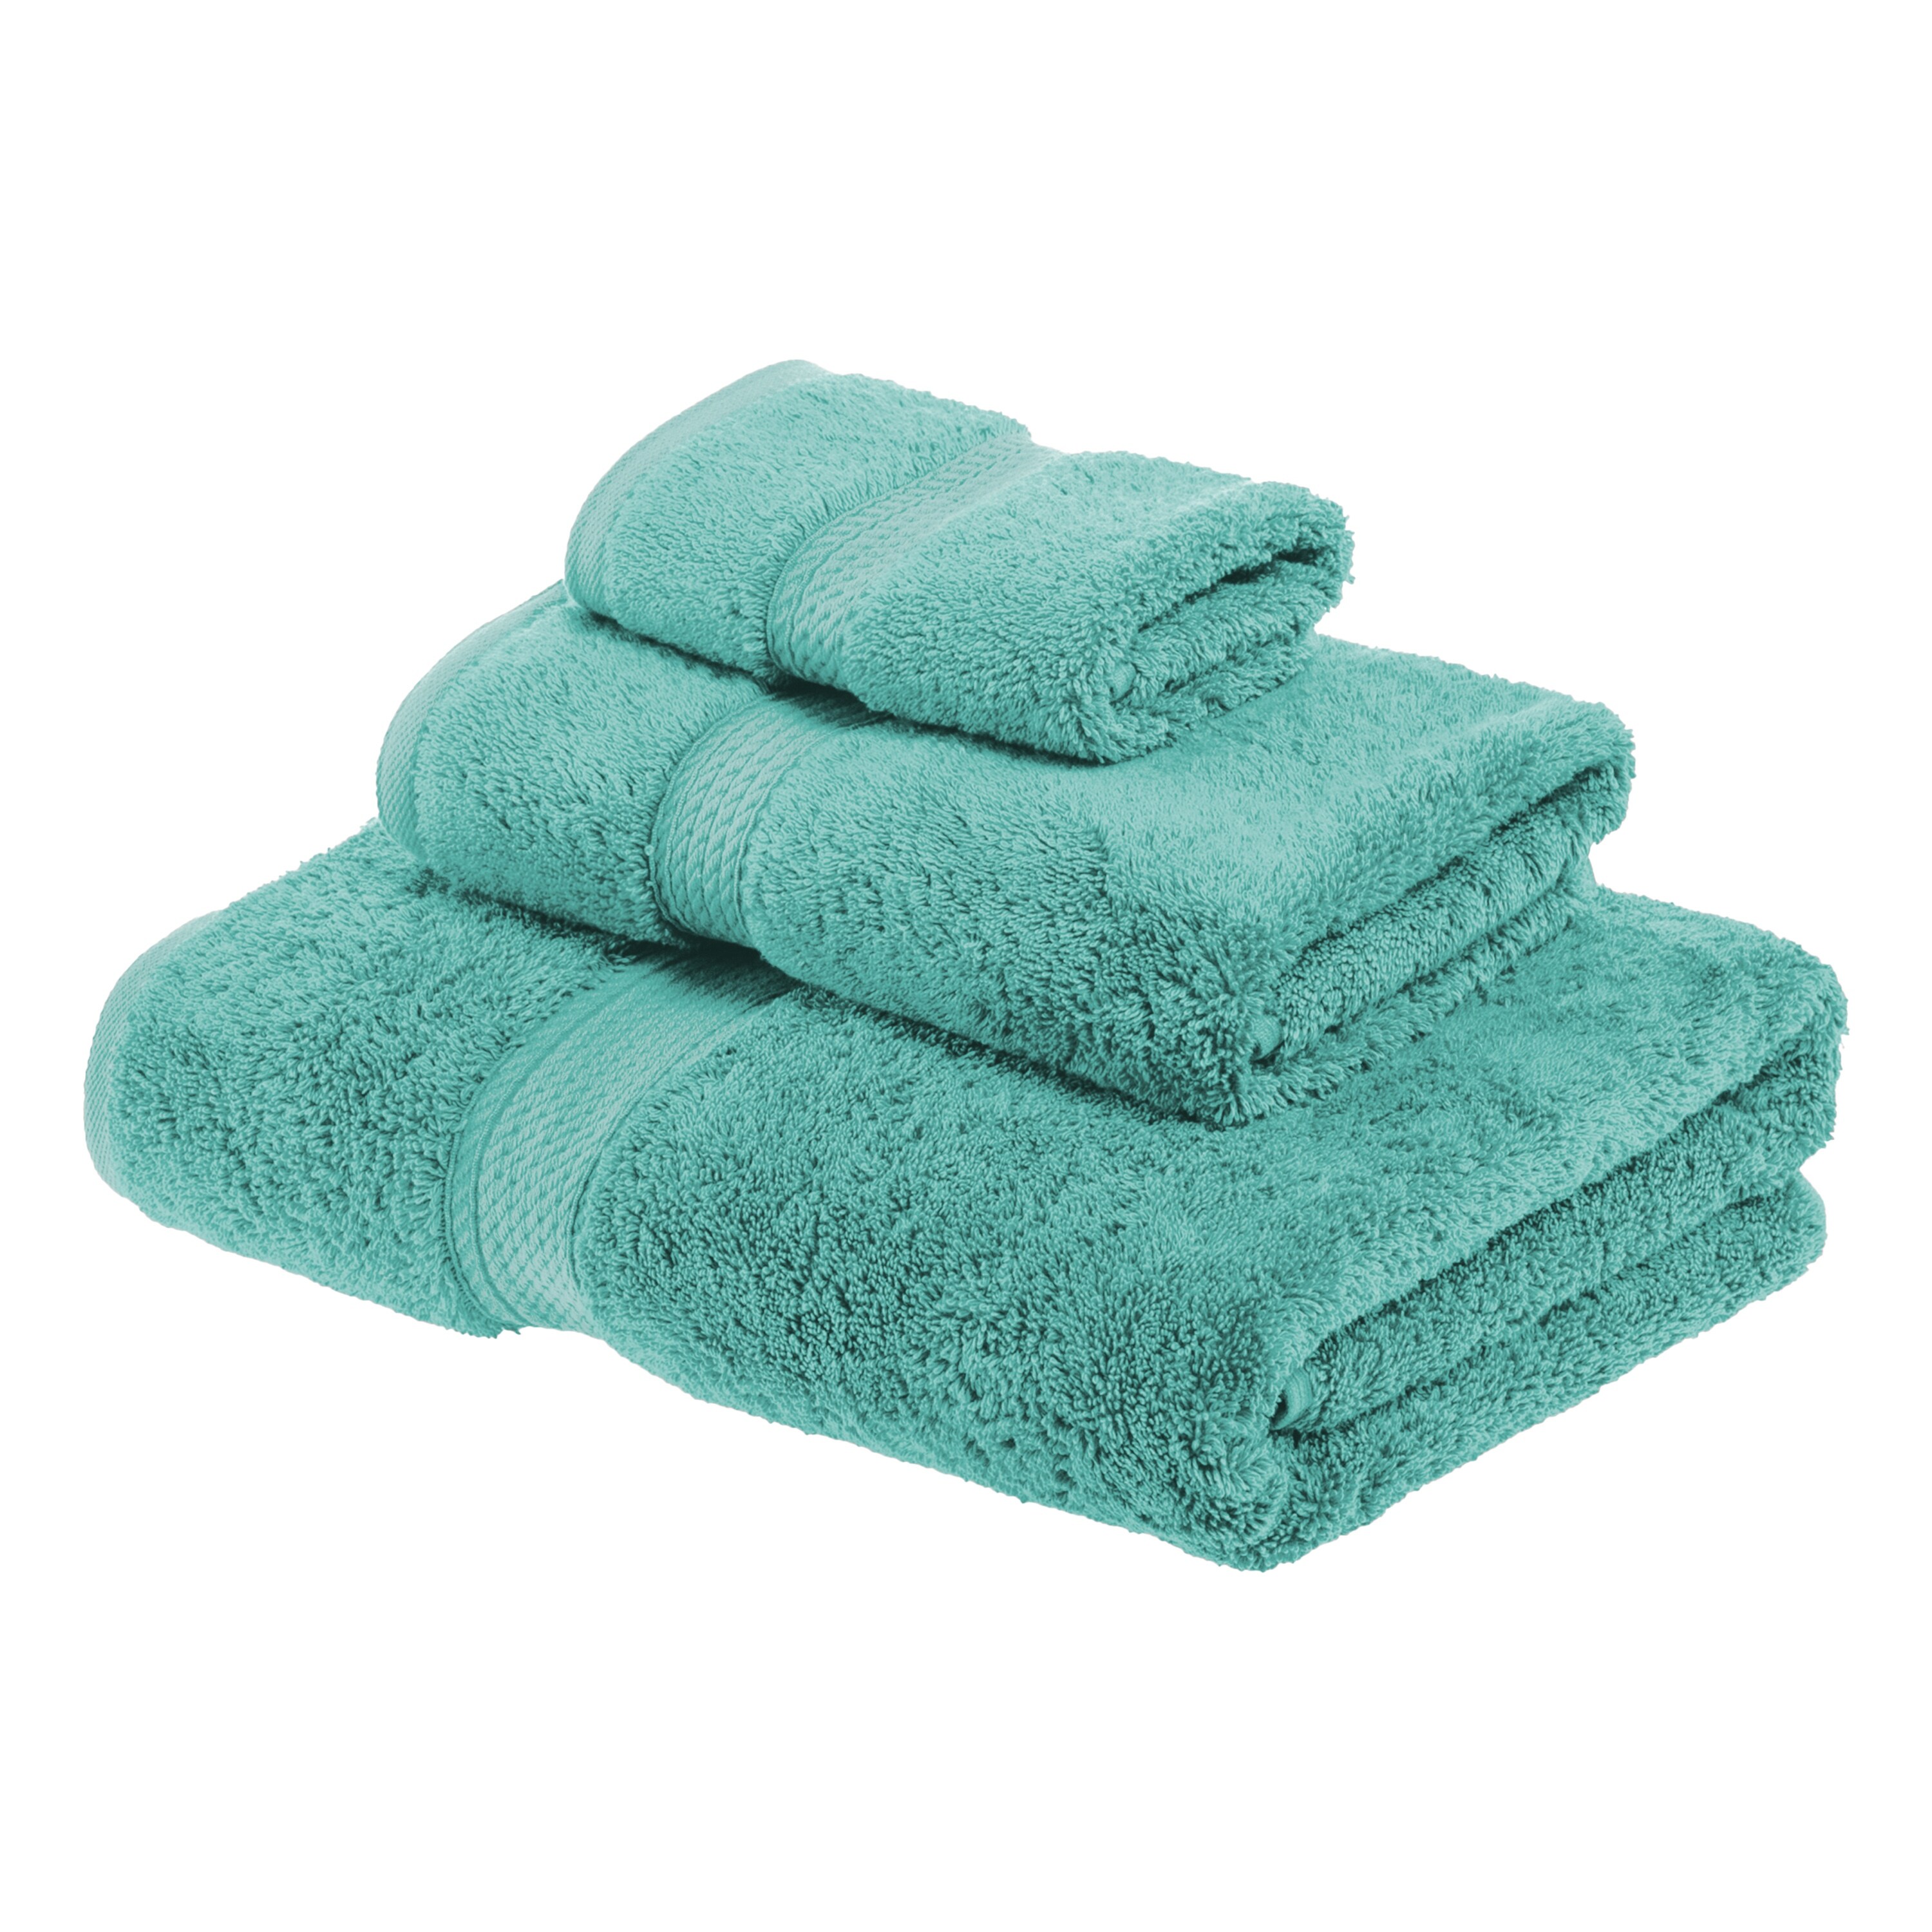 https://ak1.ostkcdn.com/images/products/is/images/direct/1ad6bce10d7c06eb341dcf66f0763ba9a040c4d0/Superior-Marche-Egyptian-Cotton-3-Piece-Towel-Set.jpg